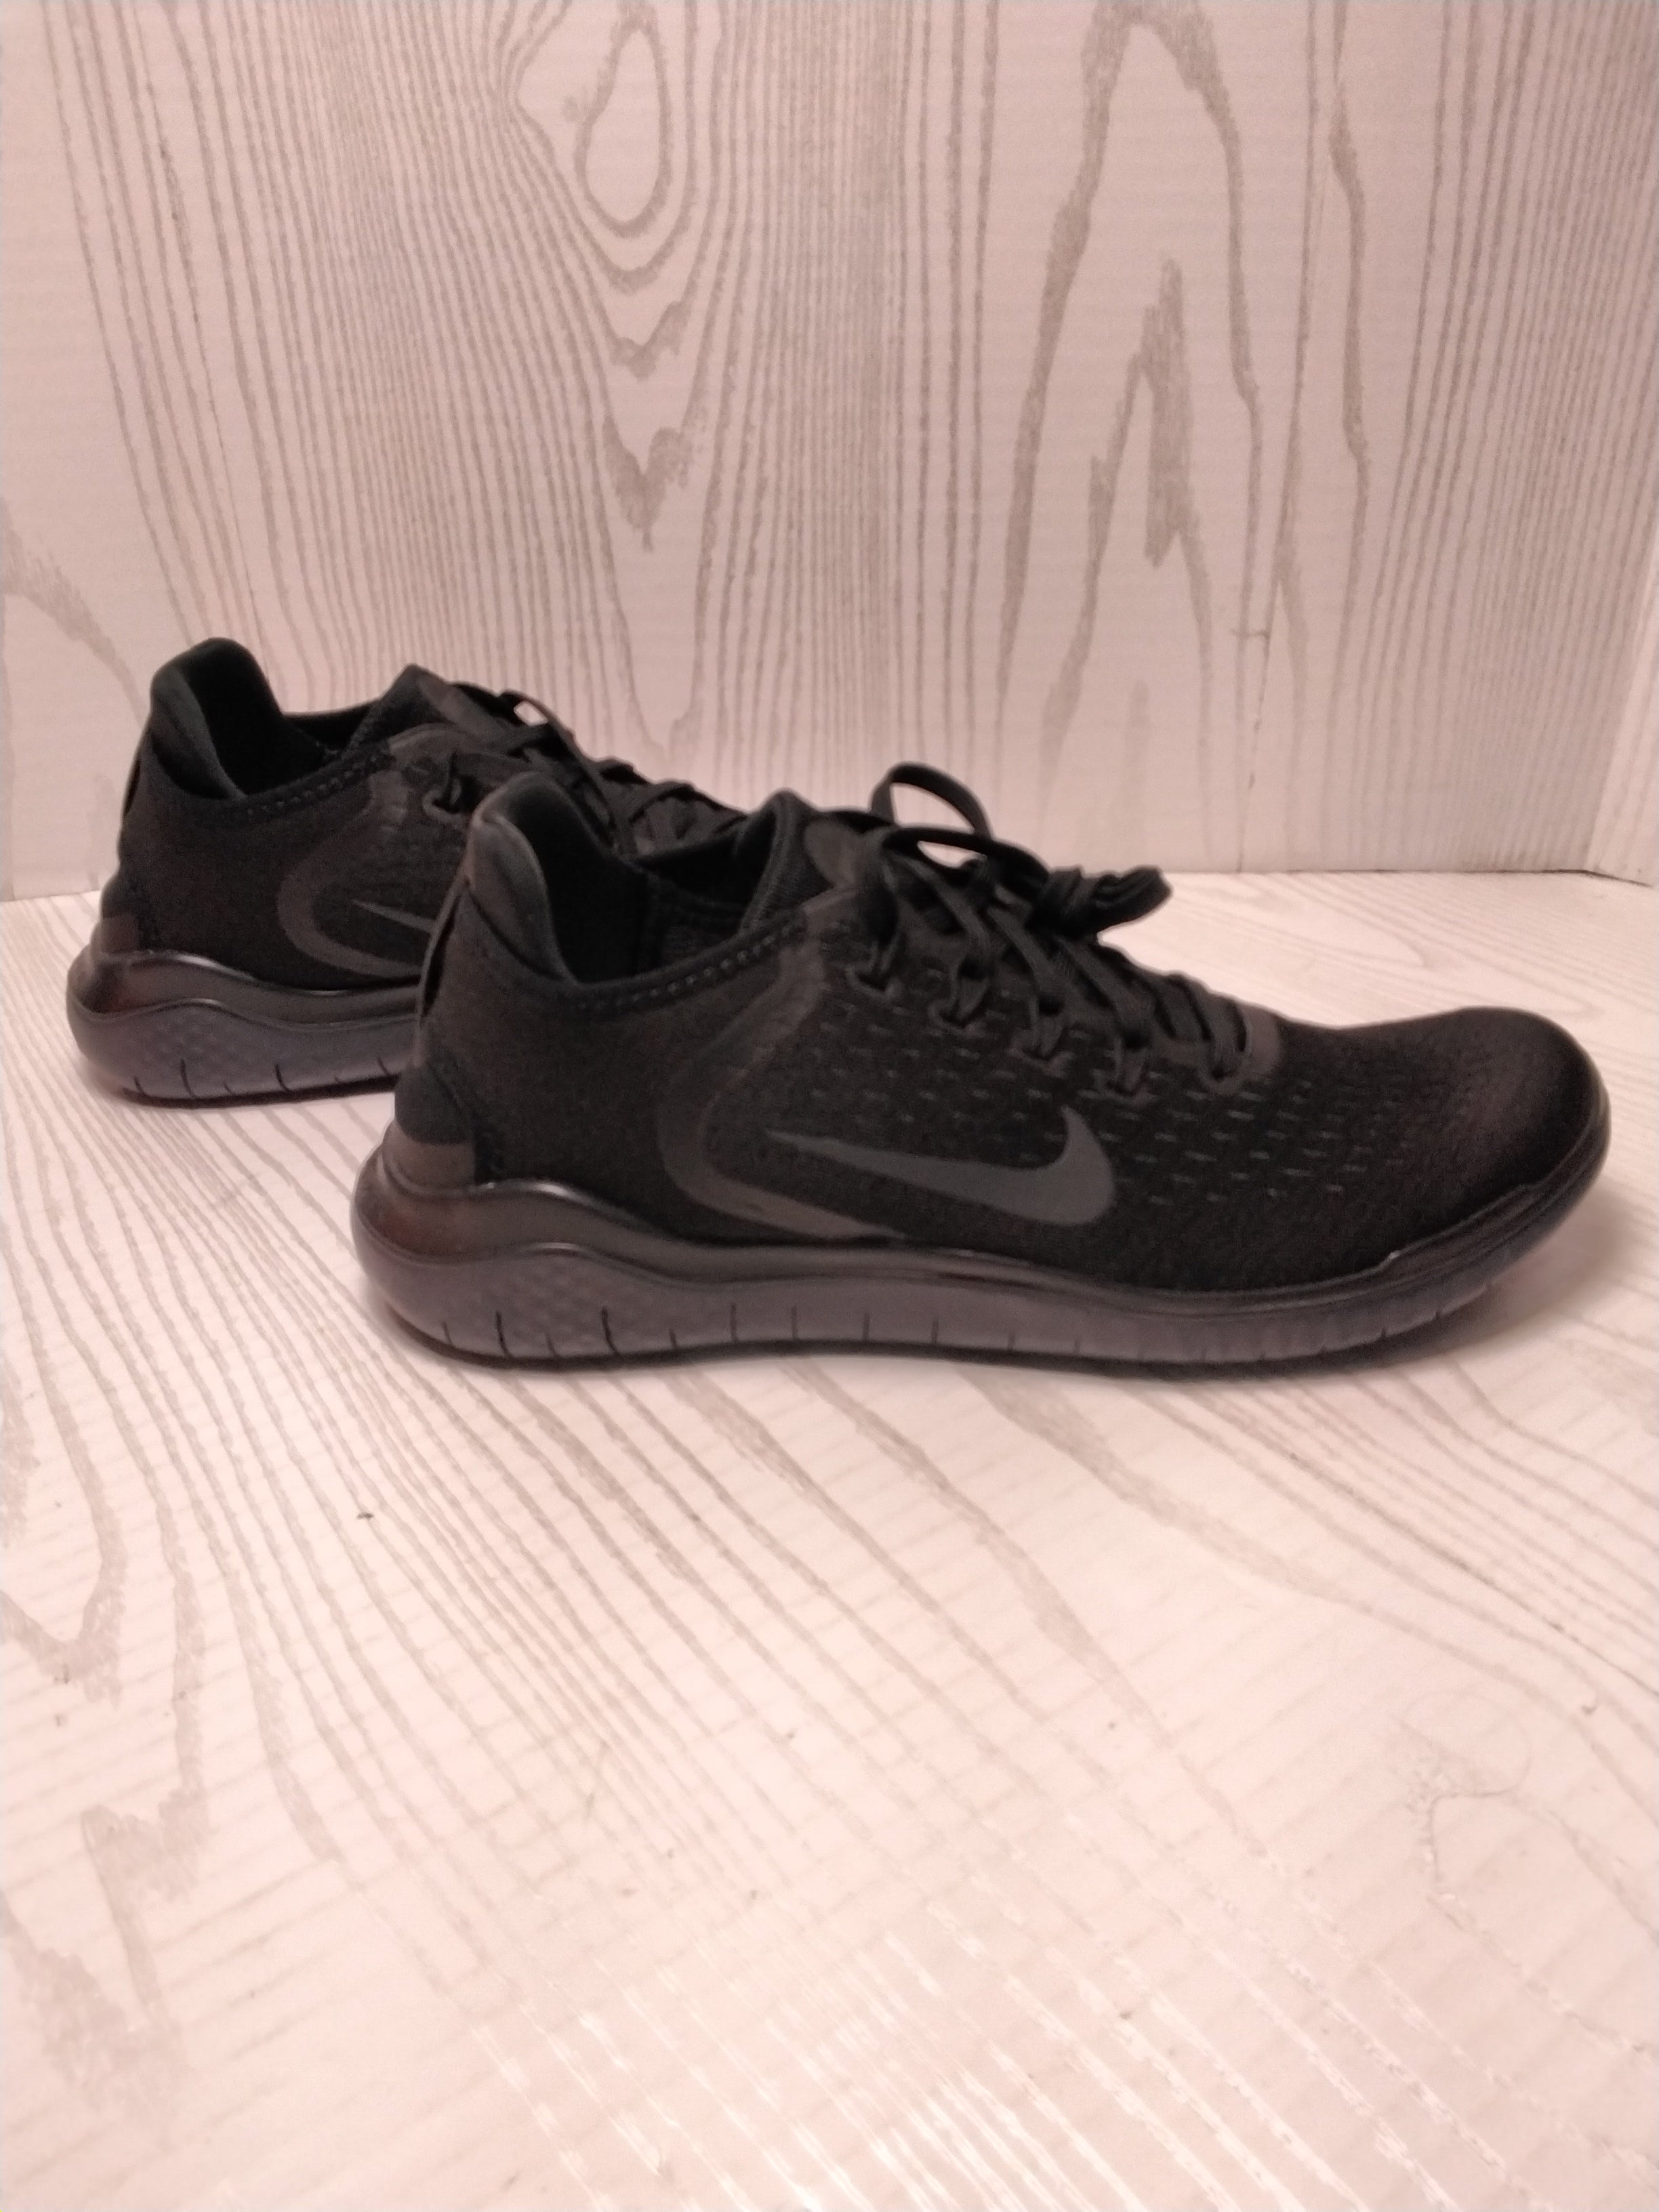 Nike Mens Free Rn 2018 Running Shoe, Black/Anthracite - Size 10.5 (7868899623150)